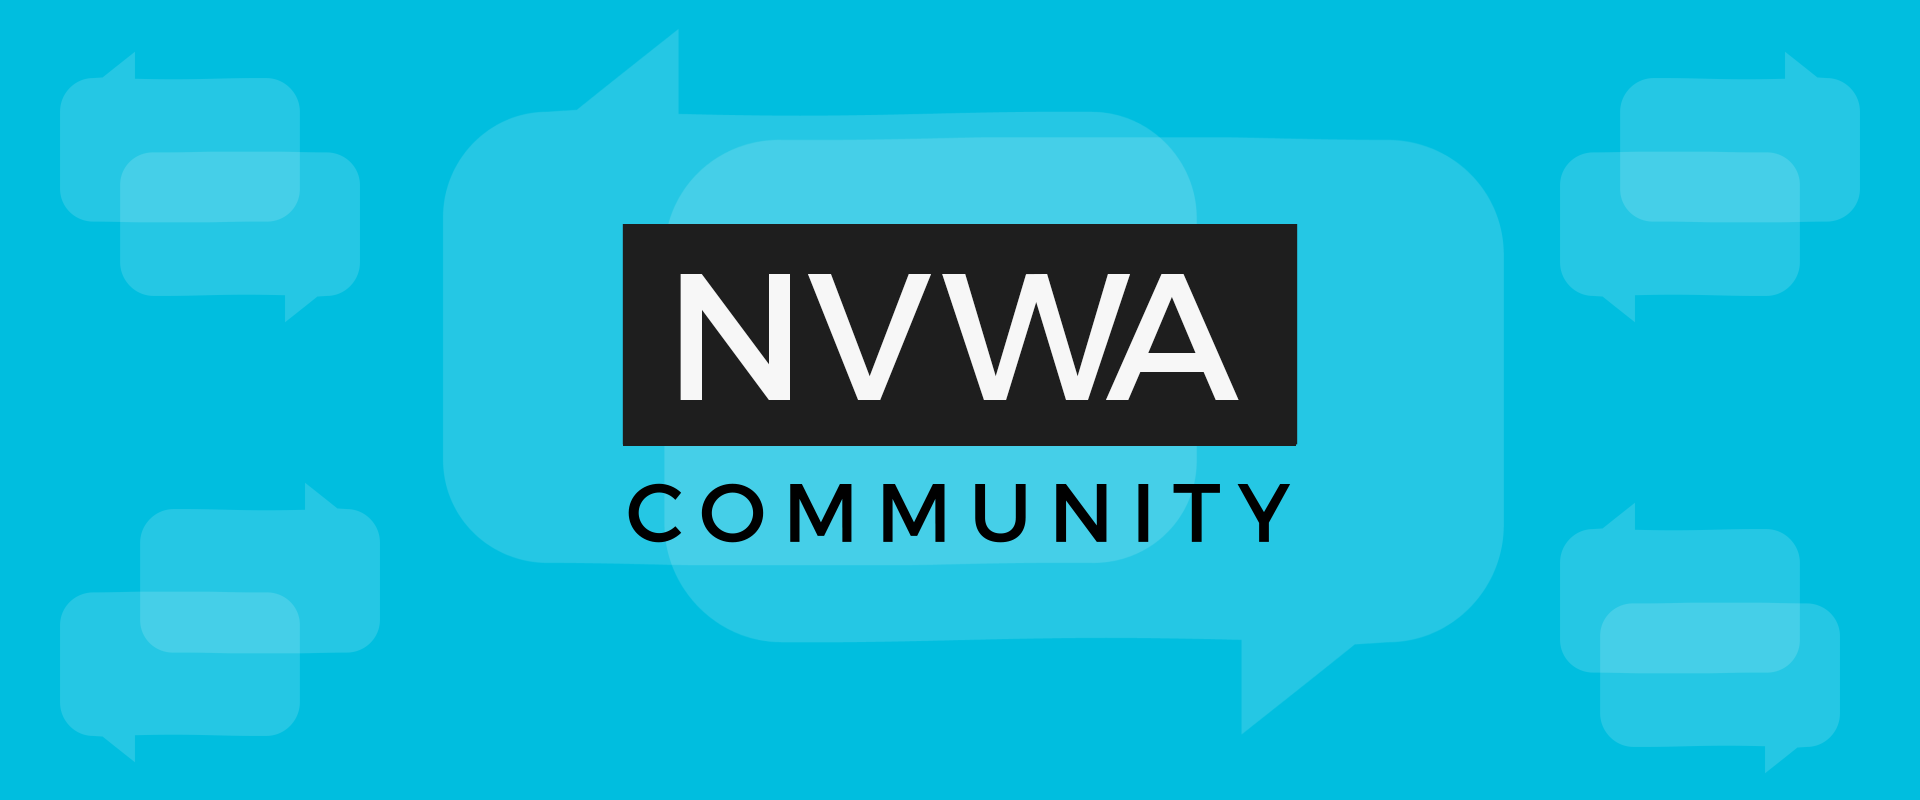 nvwa community sign-up header graphic